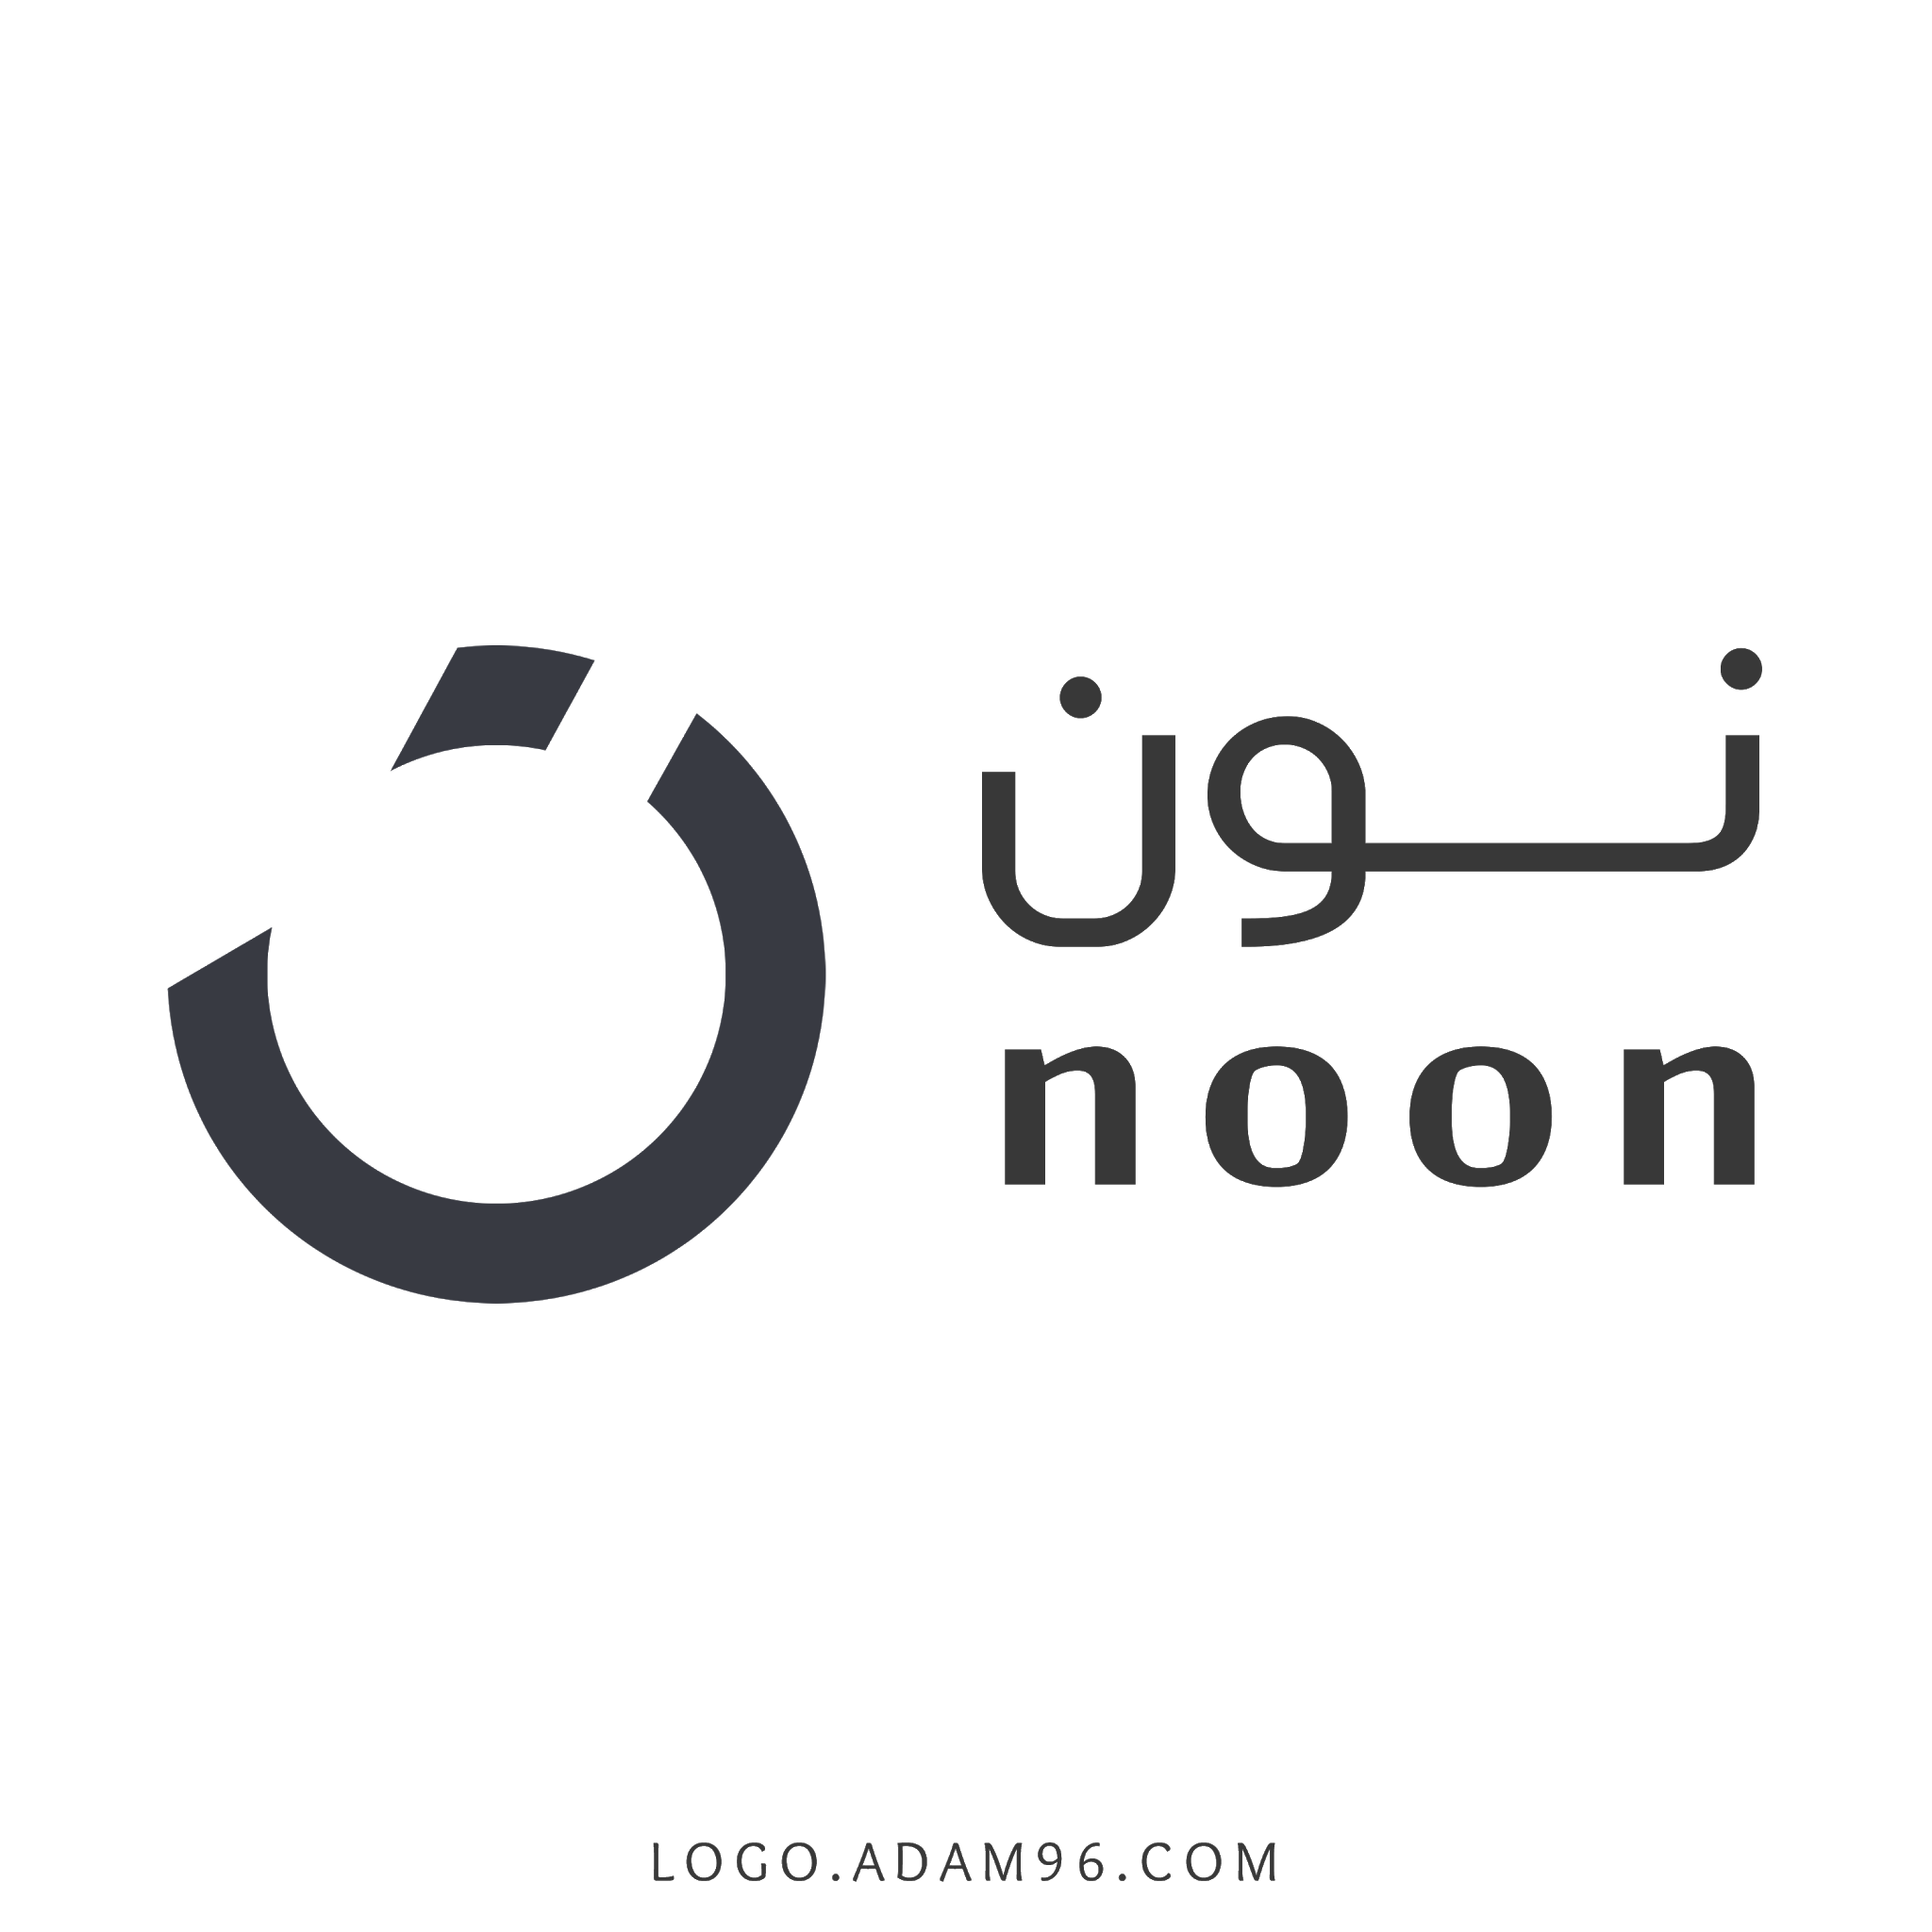 Noon. Noon logo. Логотип студии полдень. Hackernoon лого. Noon time